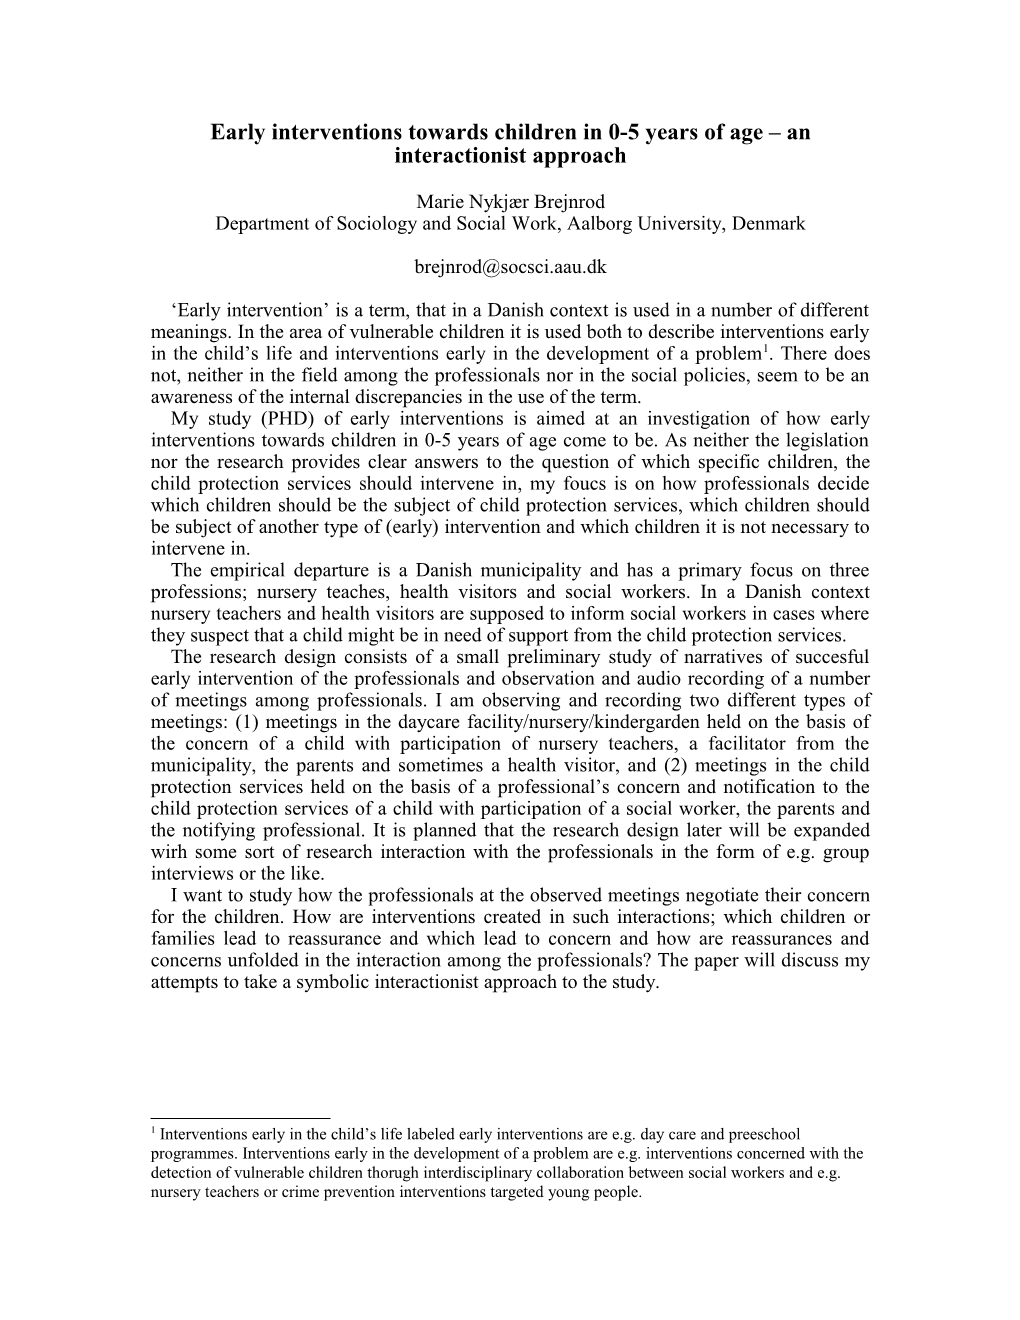 Title International Symposium on Hydrogen Metal - Systems